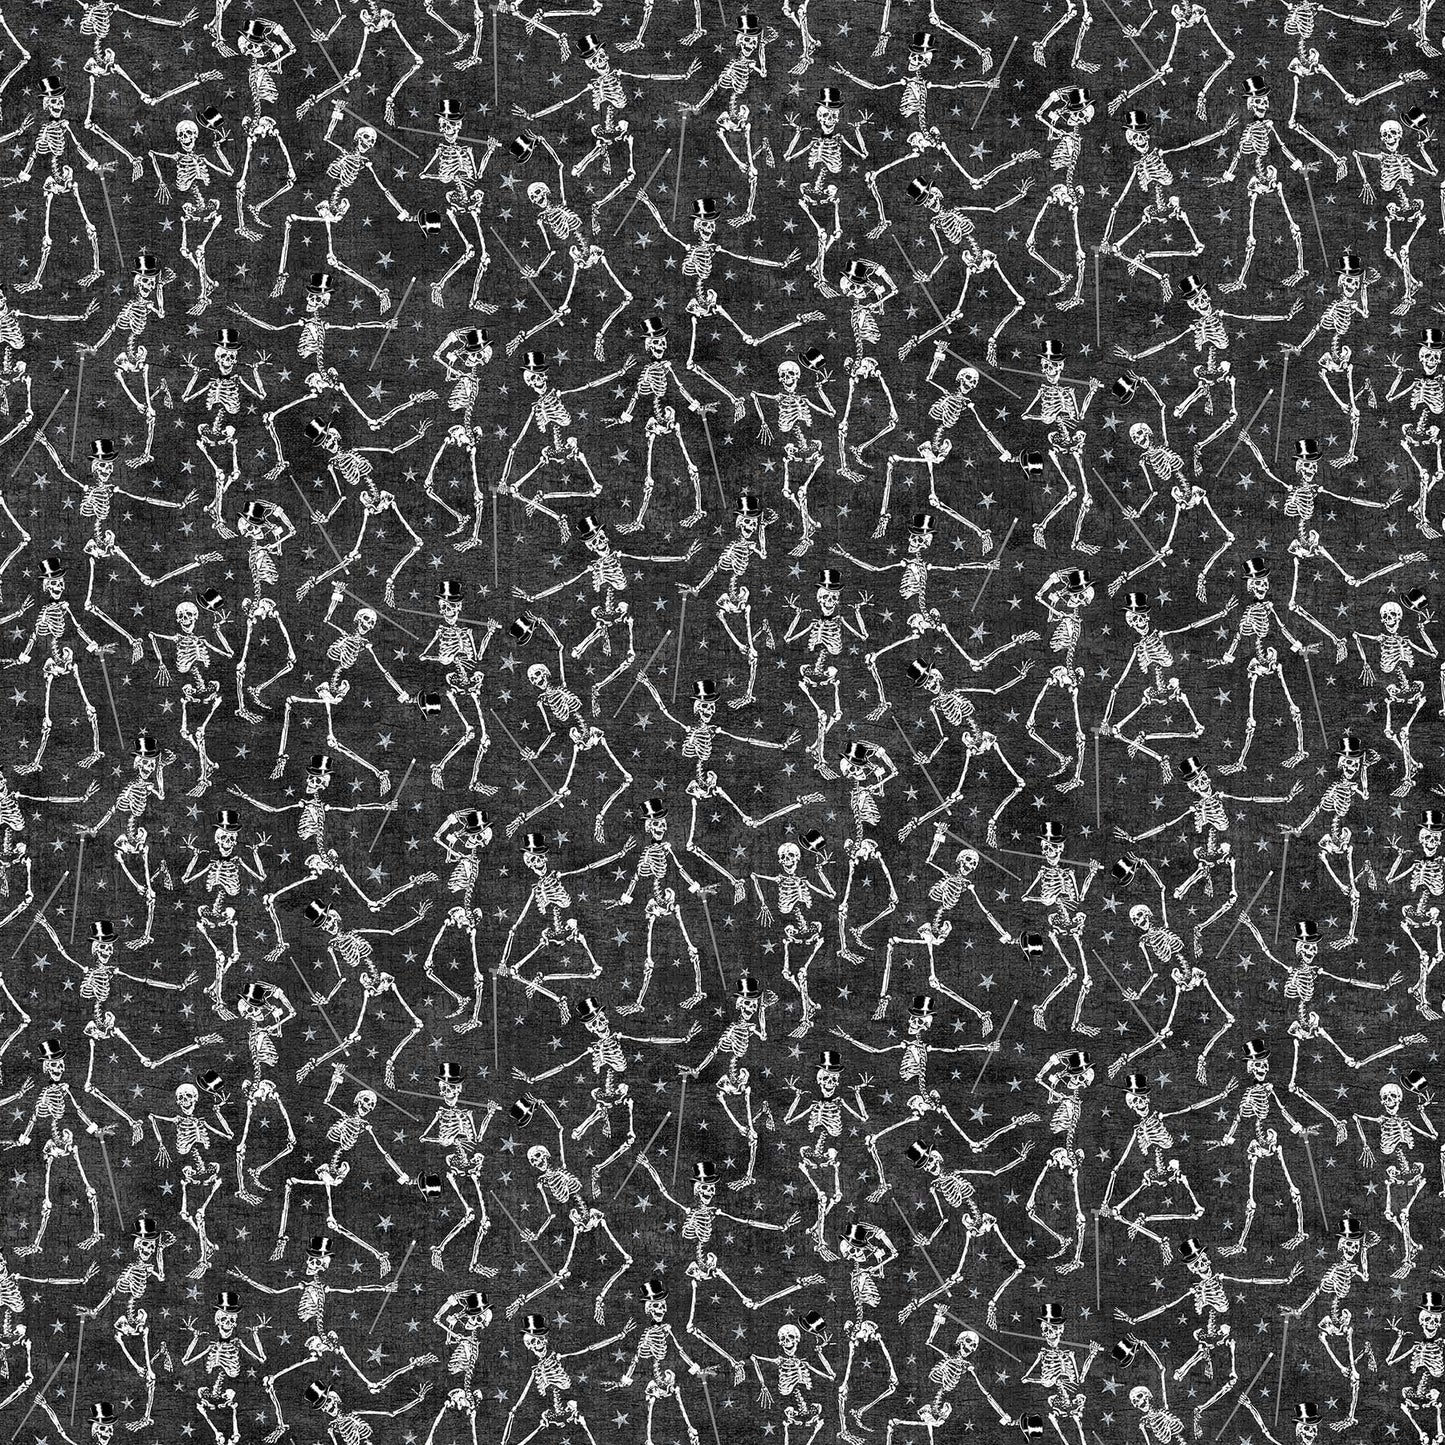 Elegantly Frightful Glitter Jazz Hands Skeletons on Black GL22203-99 Cotton Woven Fabric